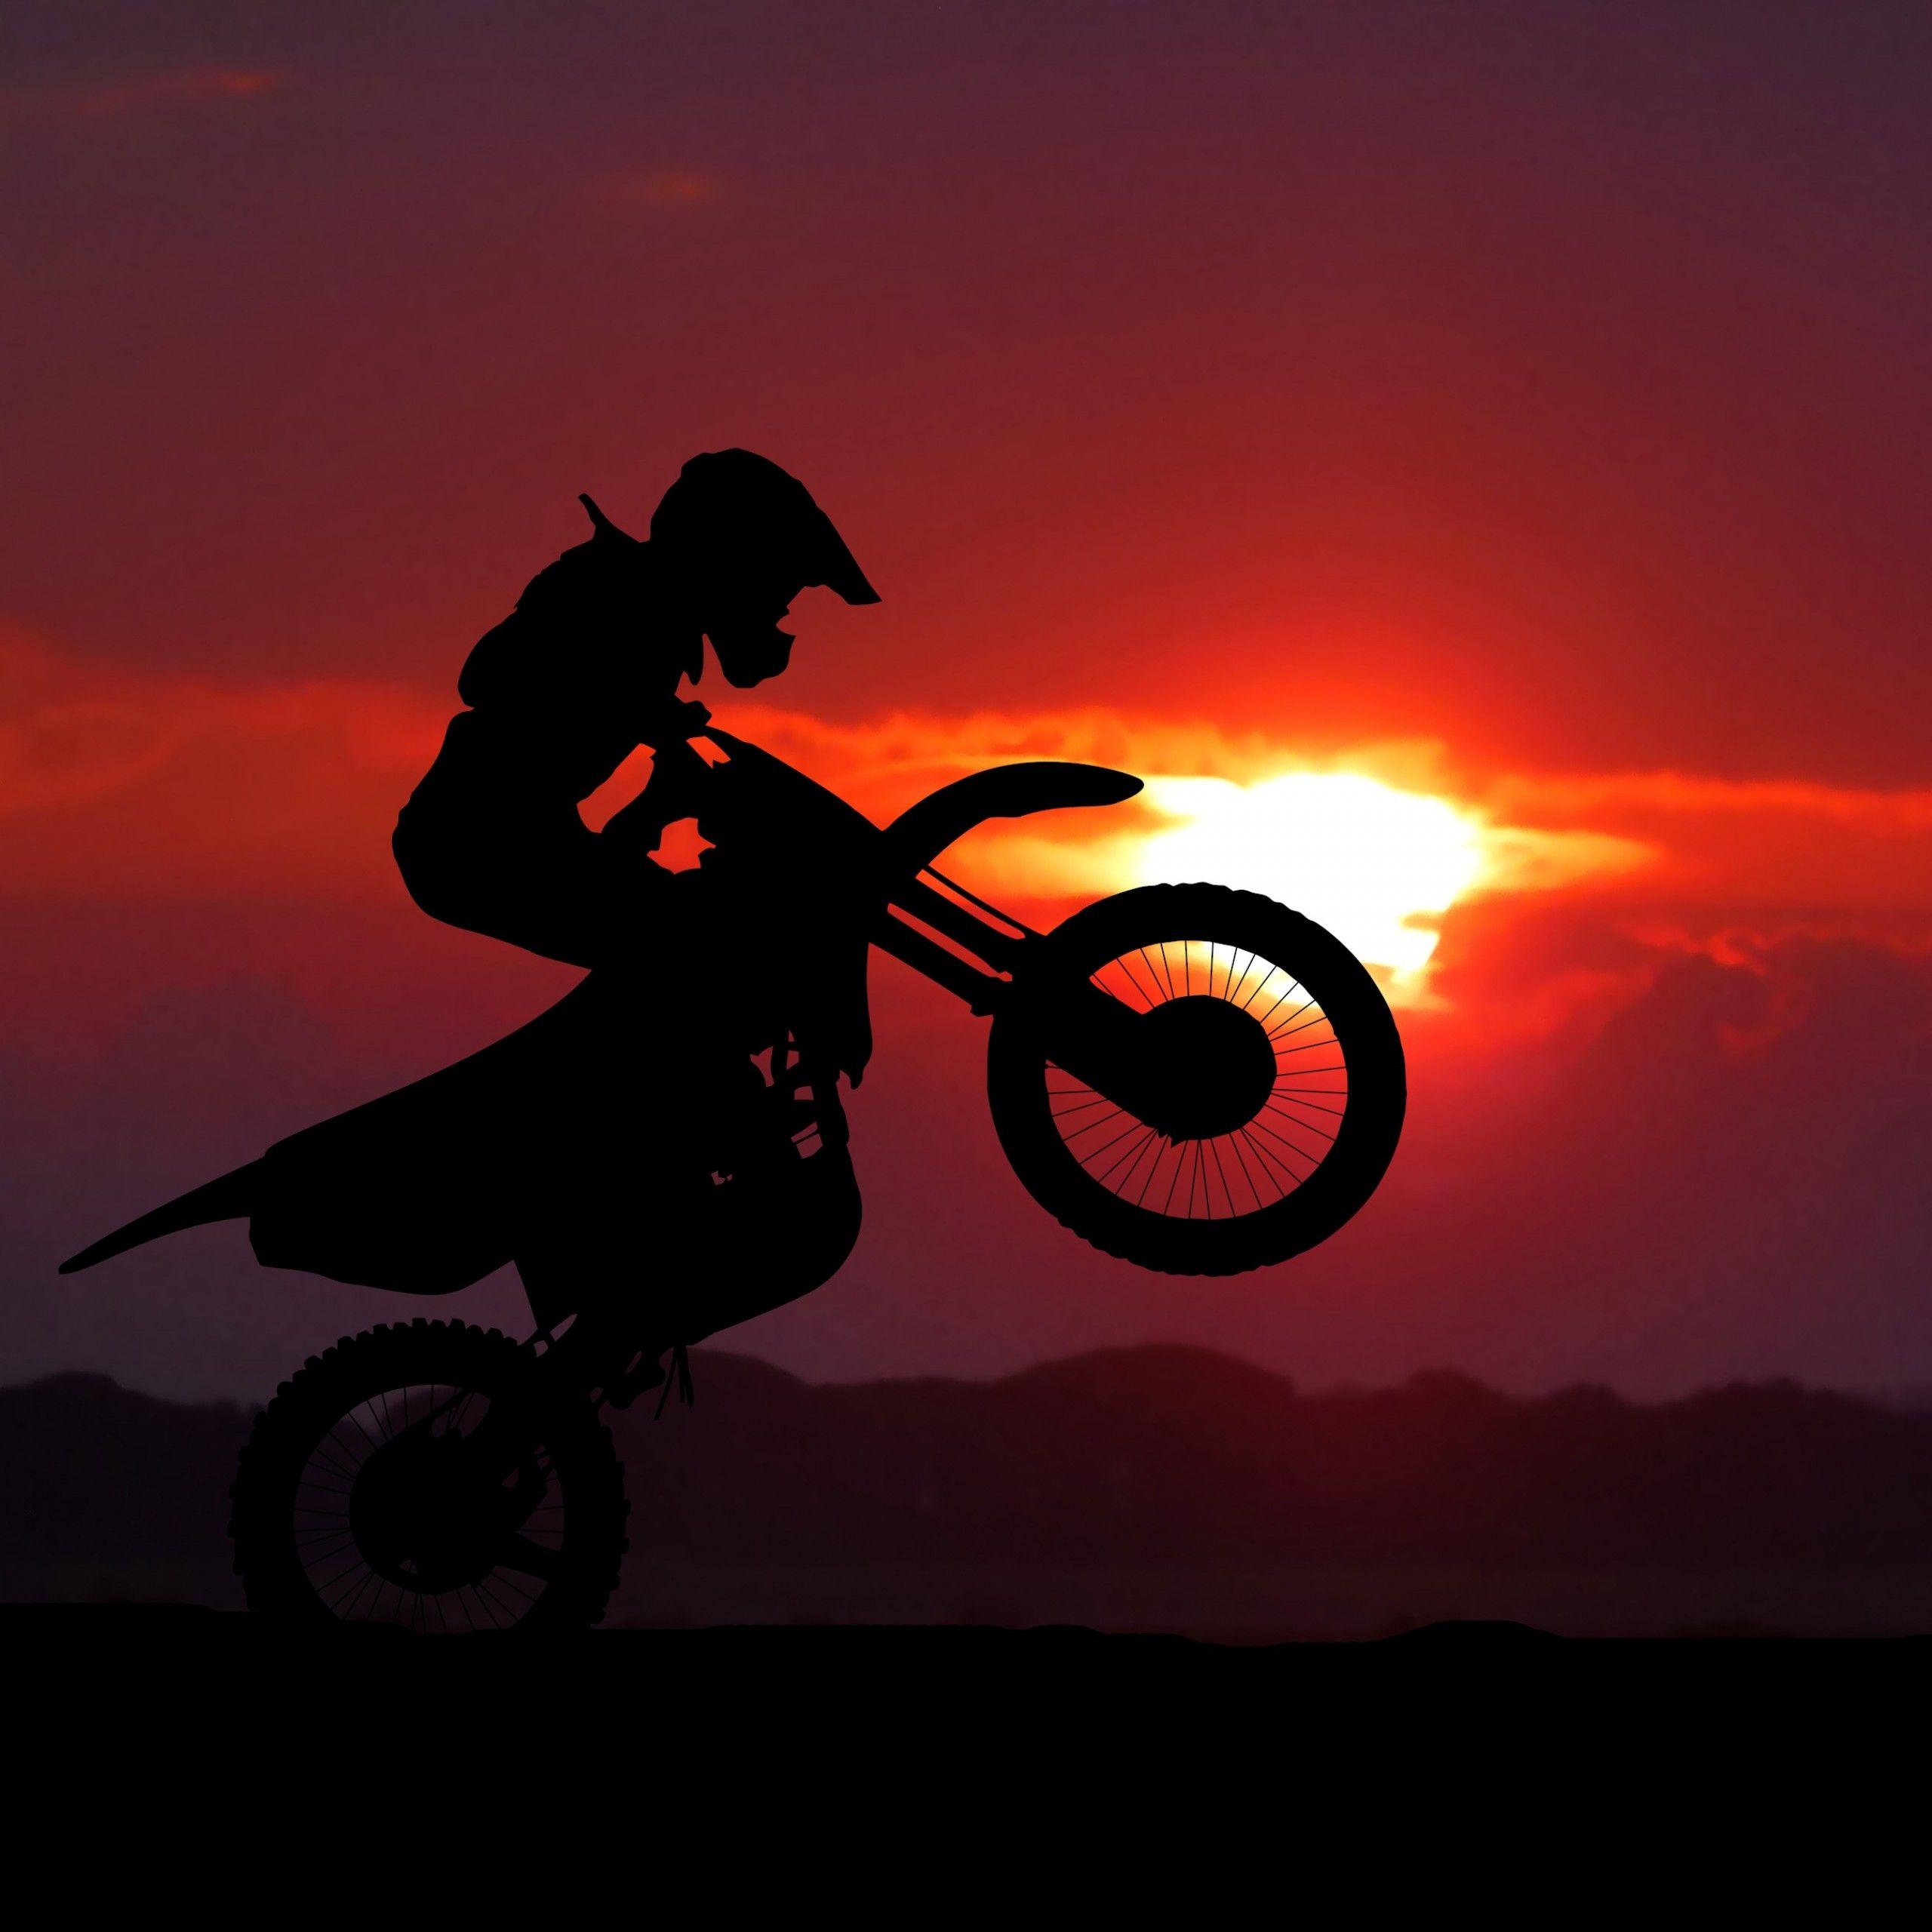 for ipod instal Sunset Bike Racing - Motocross